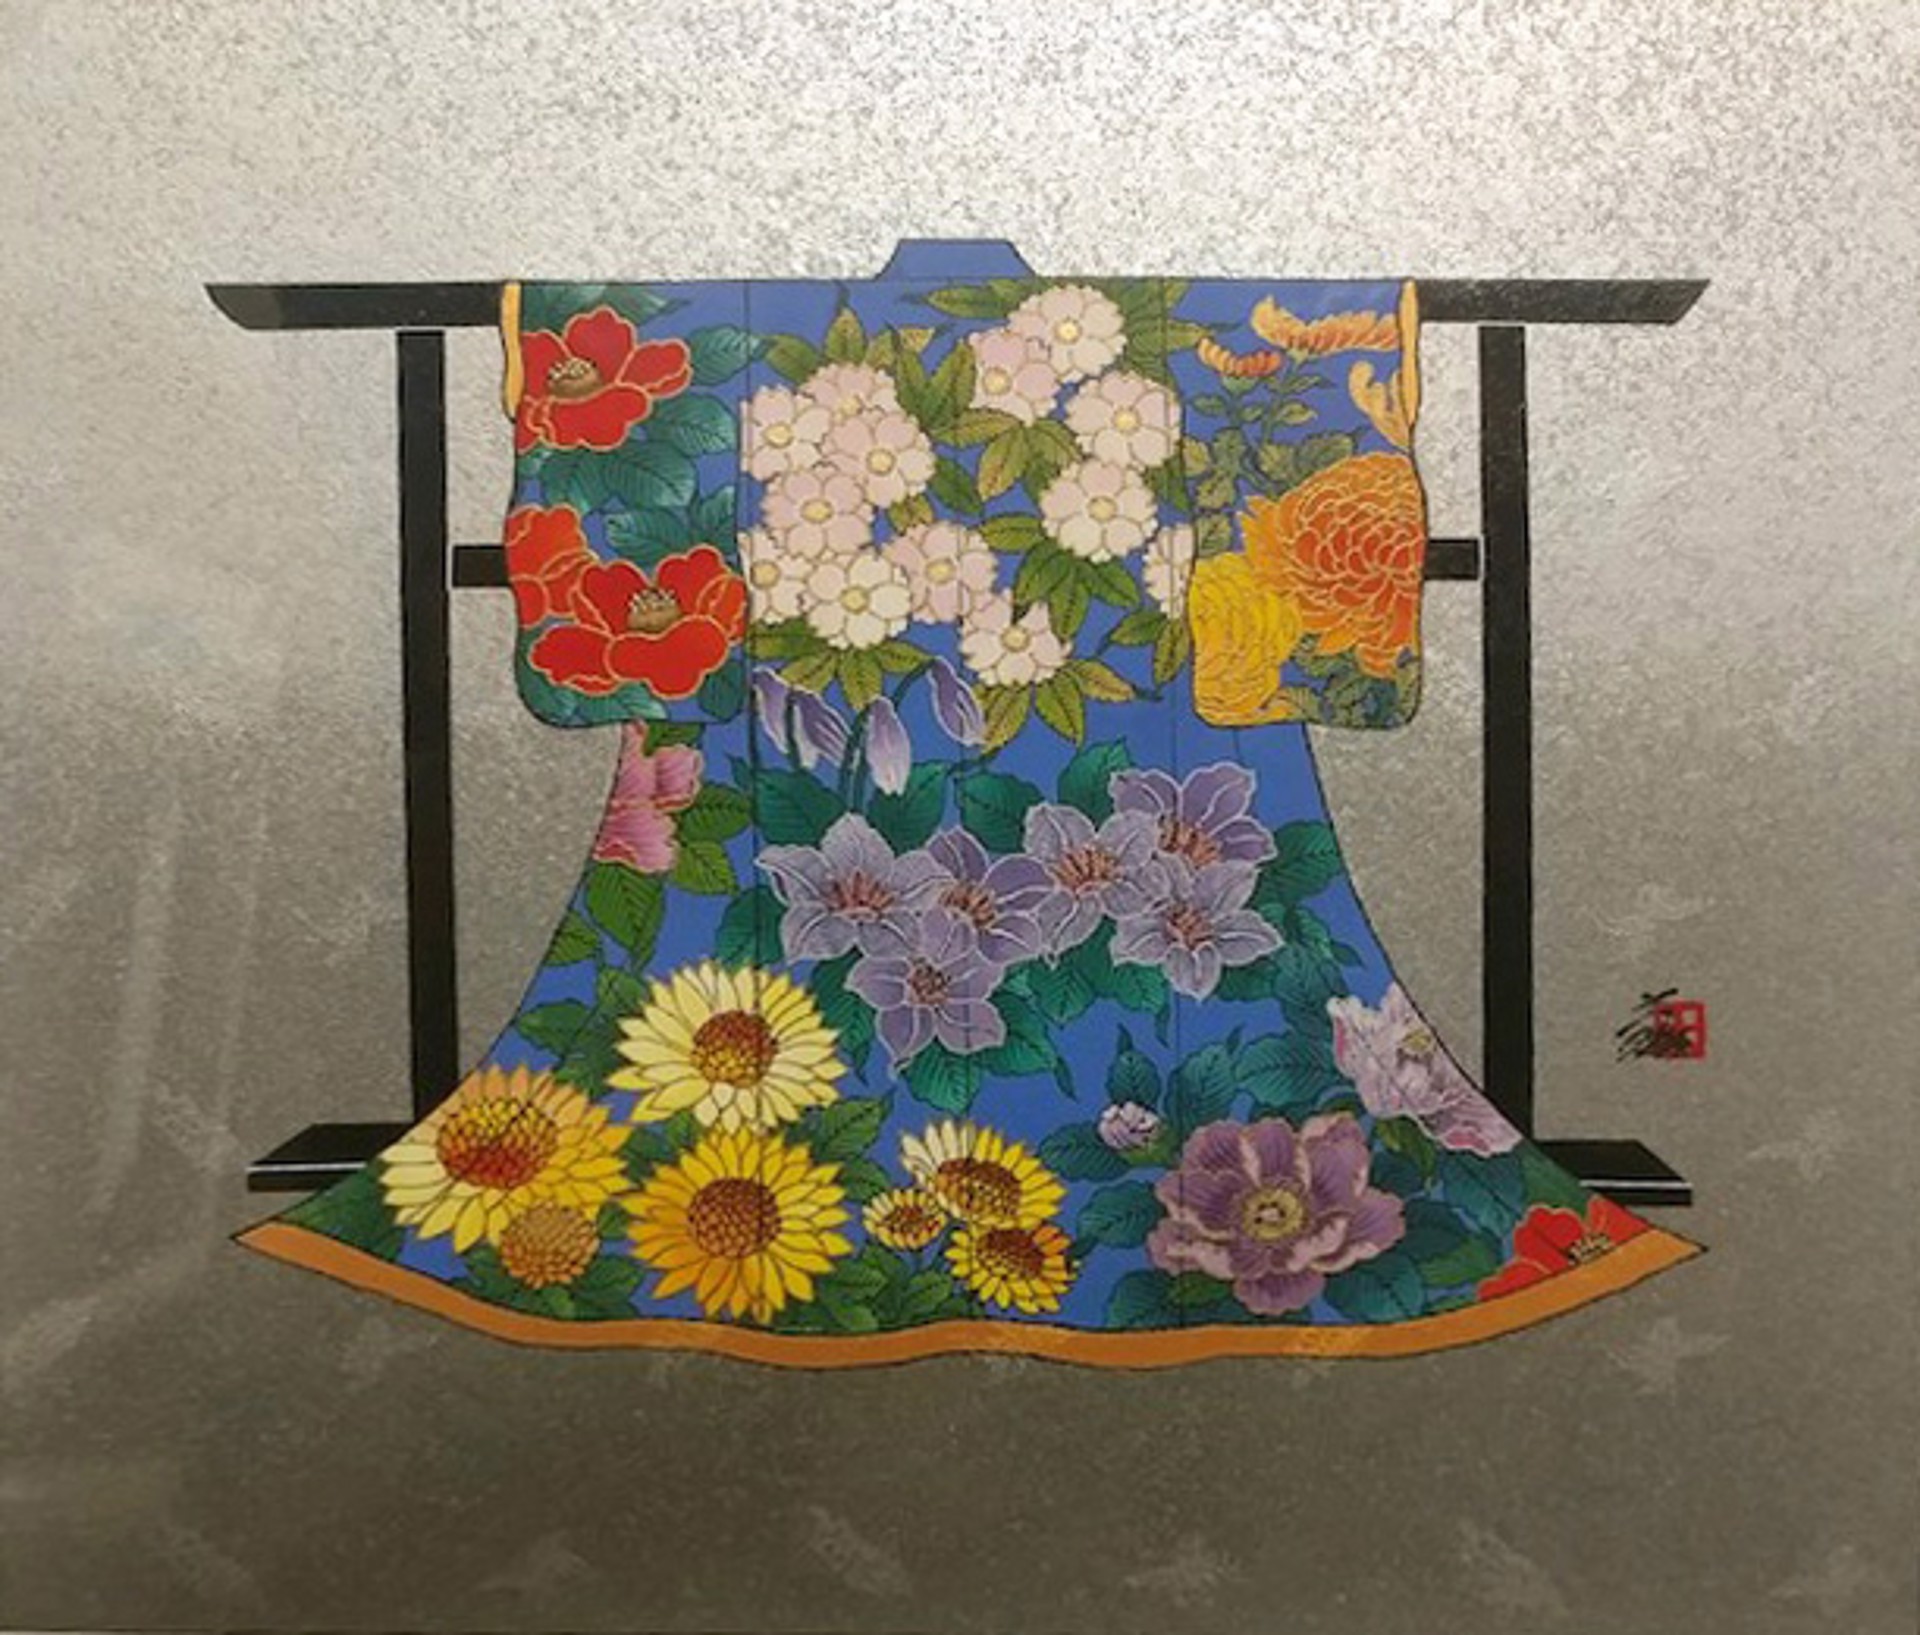 Fantasia Kimono 7 by Hisashi Otsuka